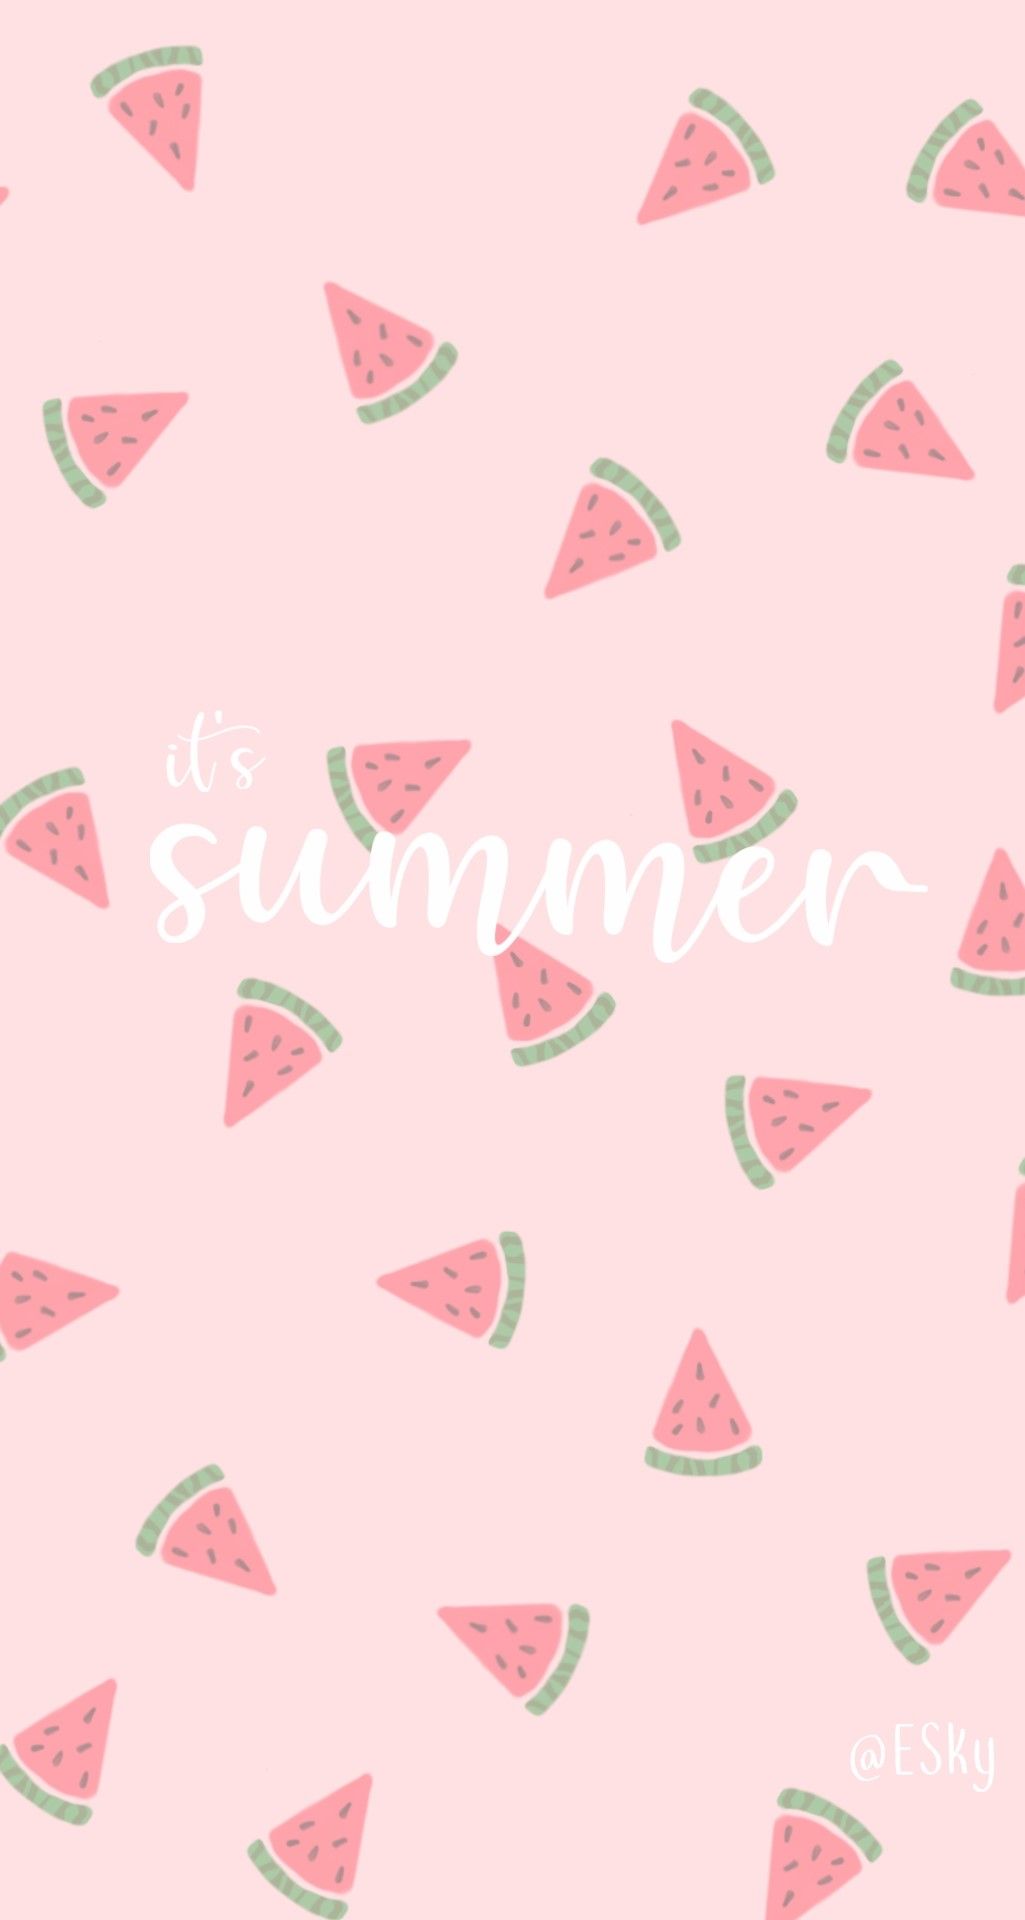 Free Watermelon Wallpaper for your phone  Watermelon Sugar Background  Summer  Wallpaper  iPhone wallpaper